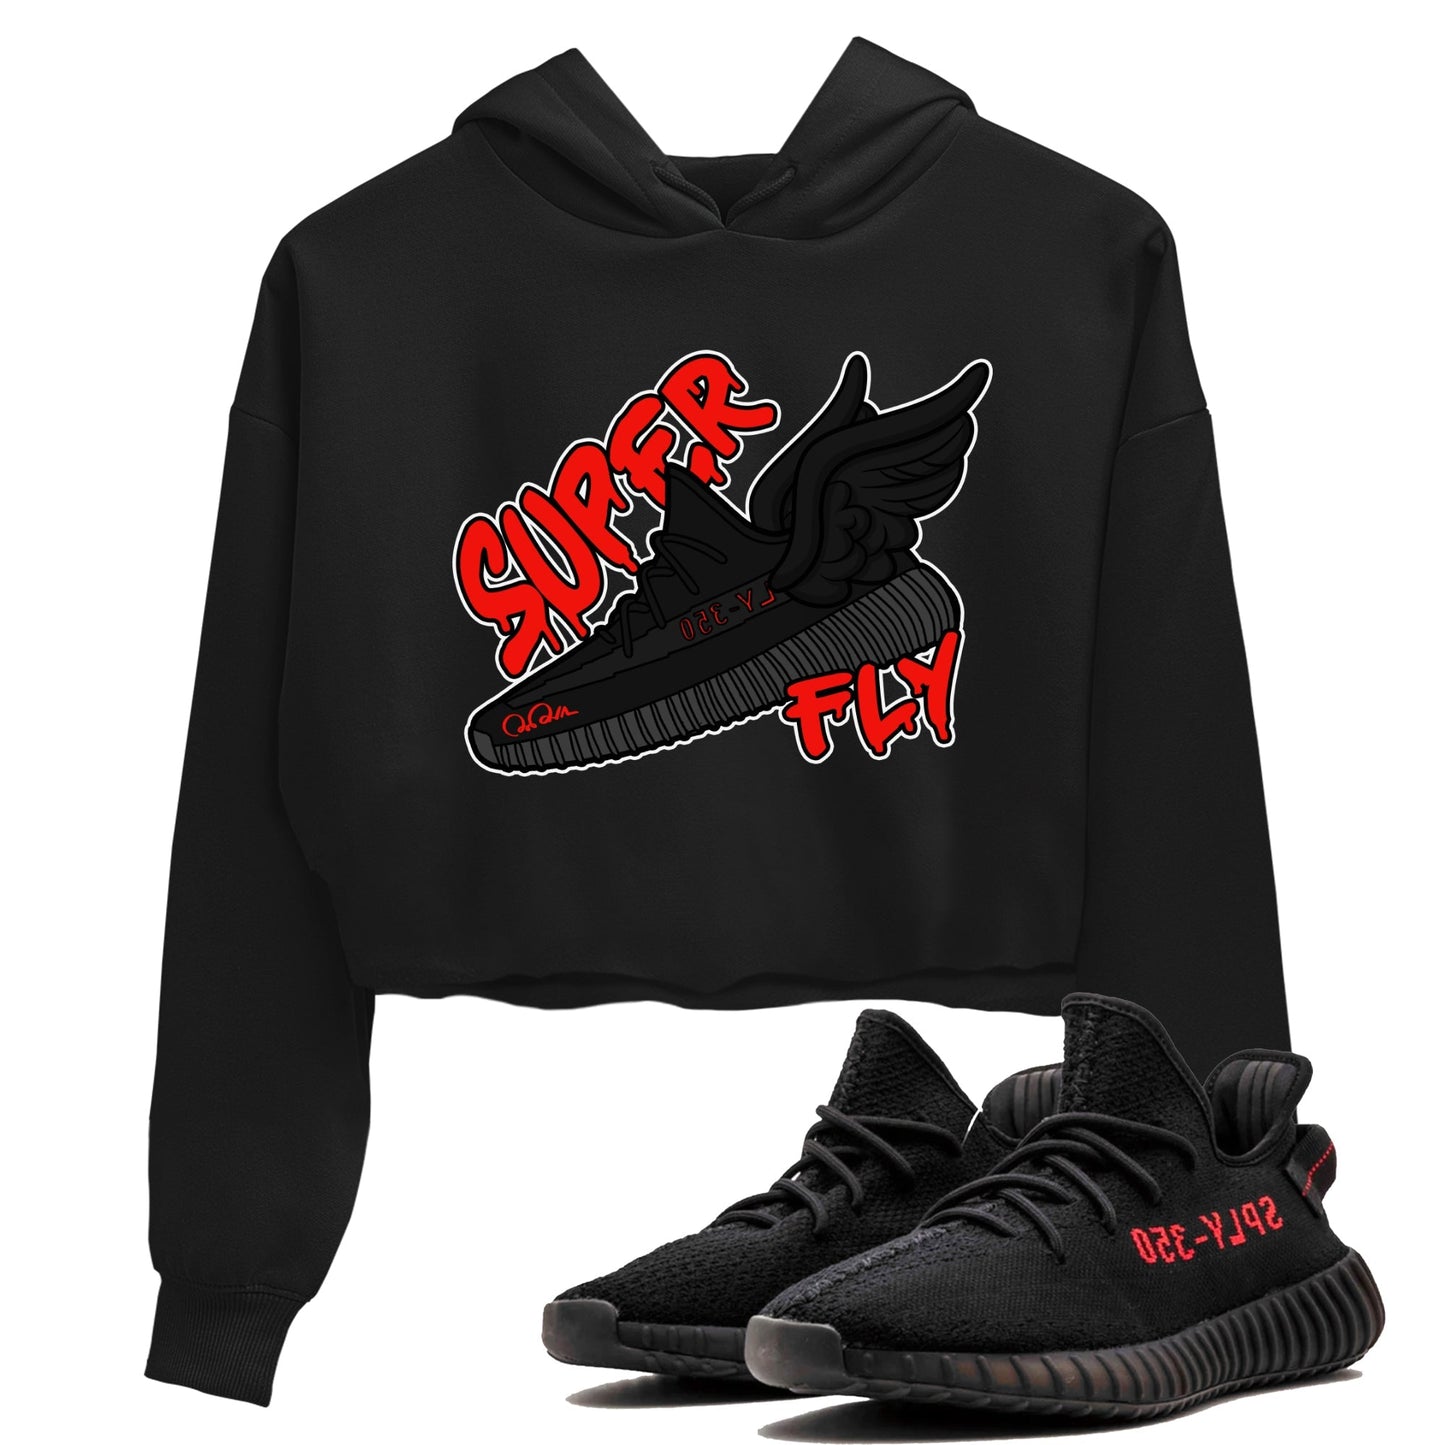 Yeezy 350 Bred shirt to match jordans Super Fly Streetwear Sneaker Shirt Adidas Yeezy Boost V2 350 Bred Drip Gear Zone Sneaker Matching Clothing Black 1 Crop T-Shirt